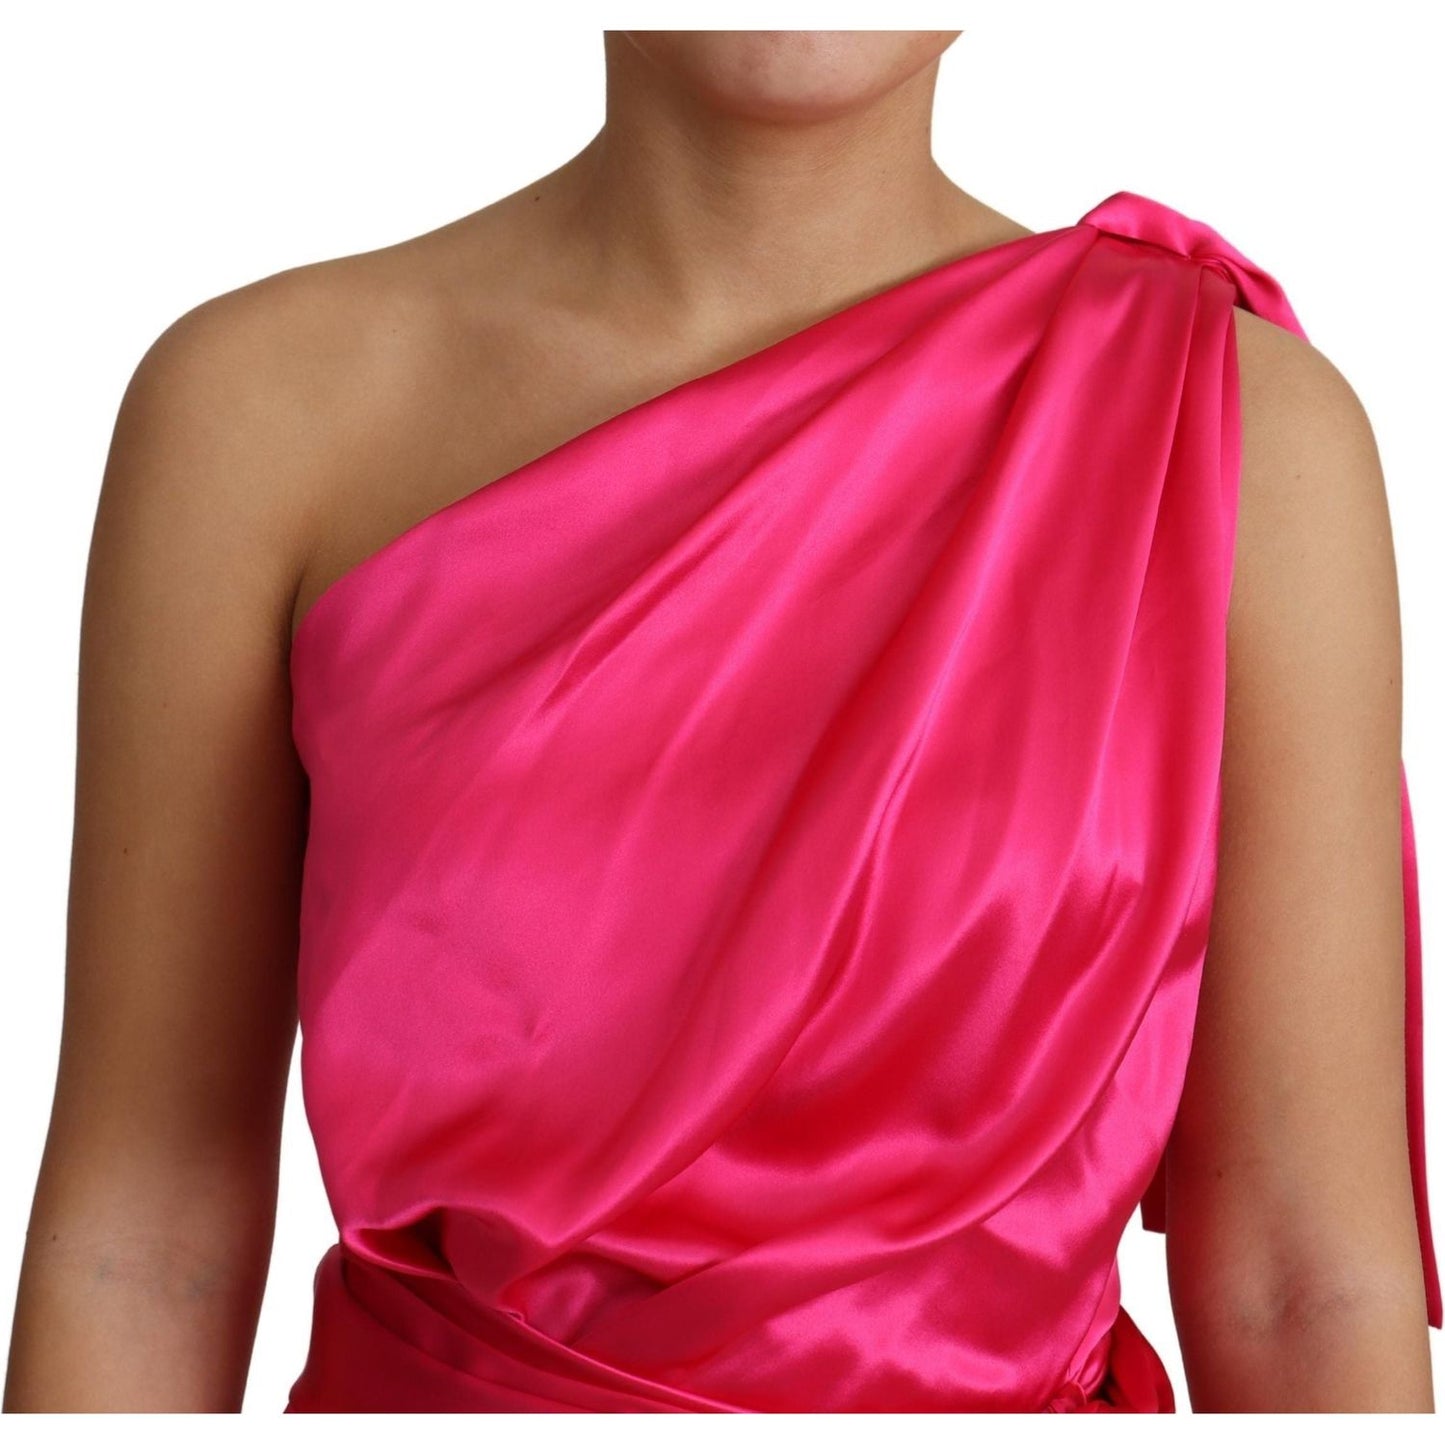 Dolce & Gabbana Elegant Fuchsia Silk One-Shoulder Wrap Dress dress-pink-fitted-cut-one-shoulder-midi-dress